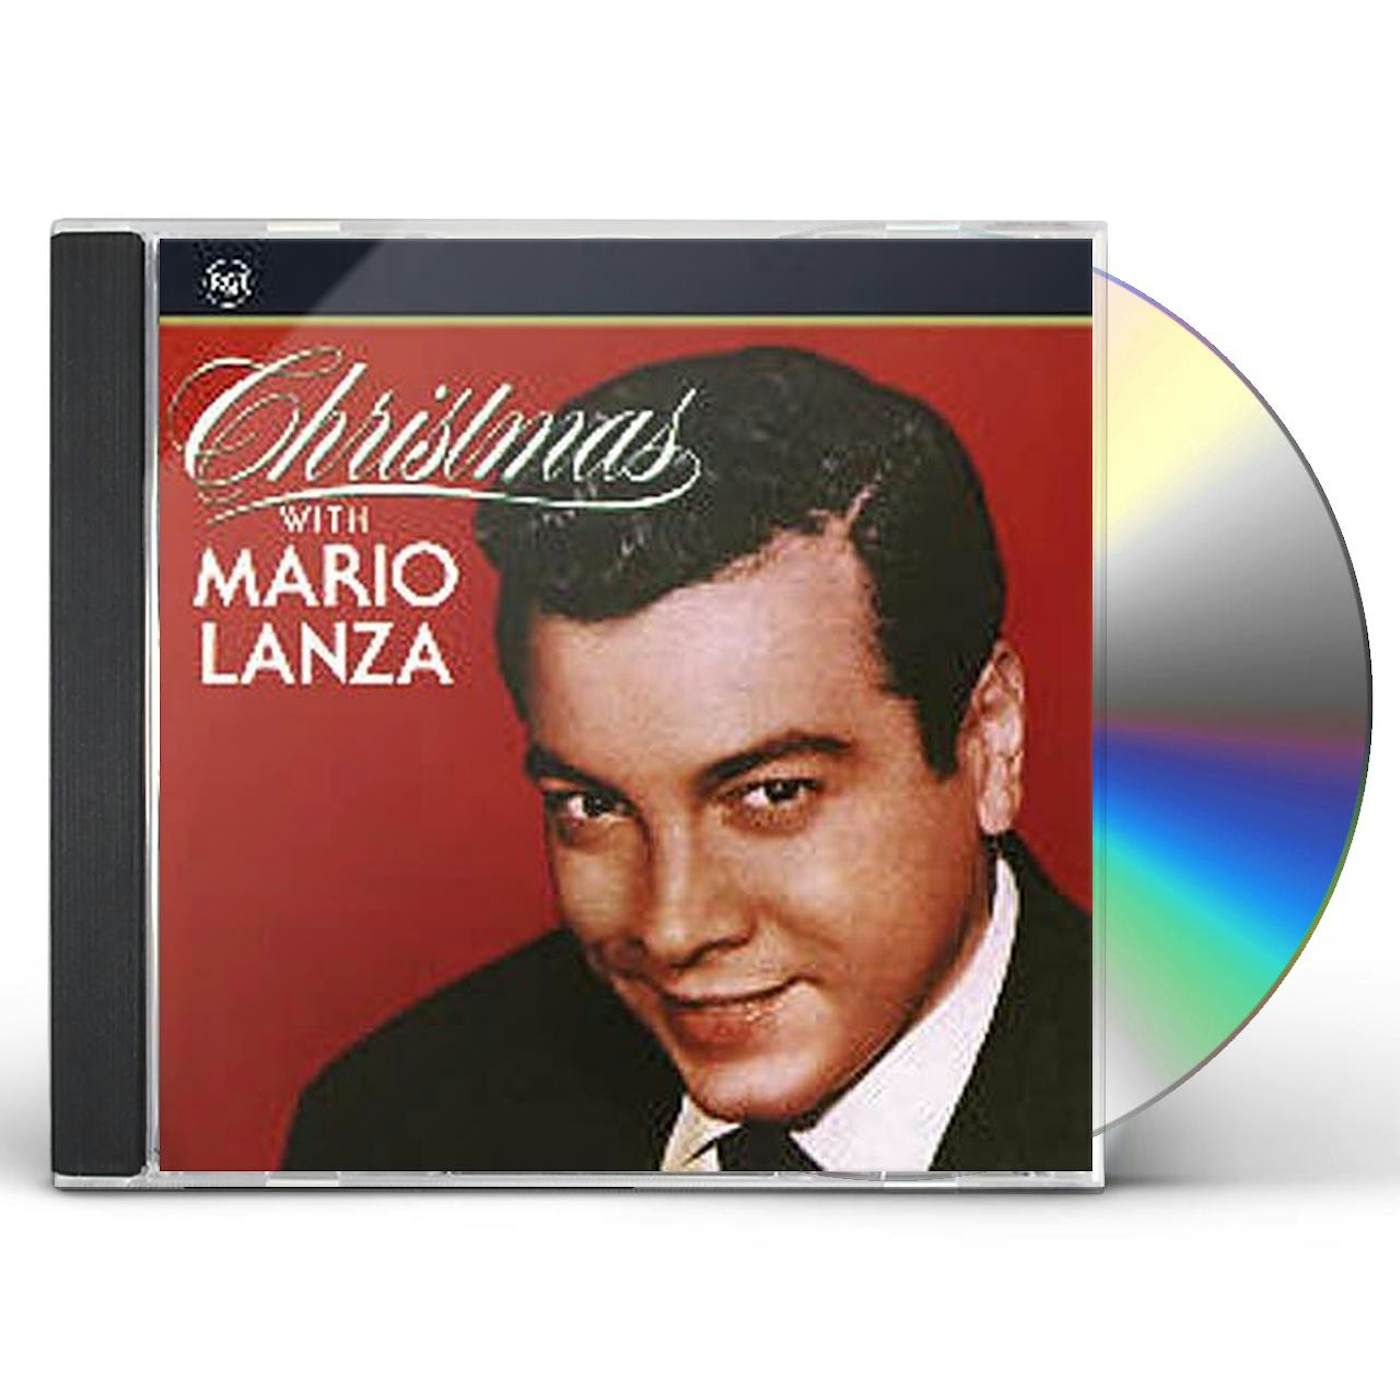 CHRISTMAS WITH MARIO LANZA CD